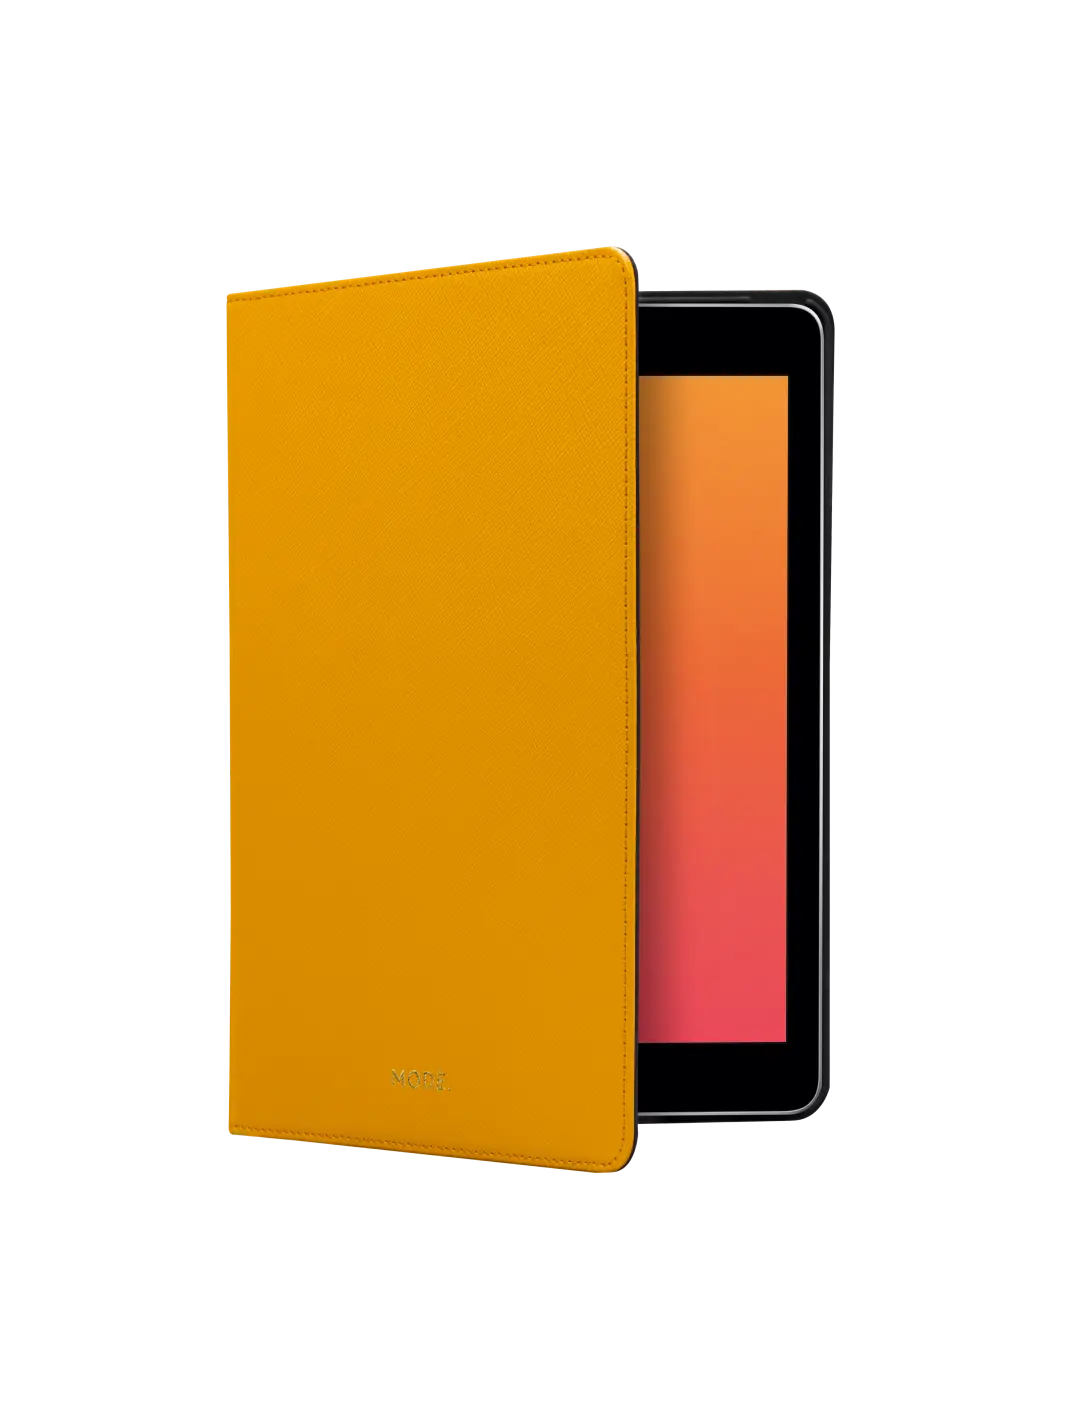 Tokyo Saffiano Sunrise Orange iPad Air (3. generation) iPad Cases